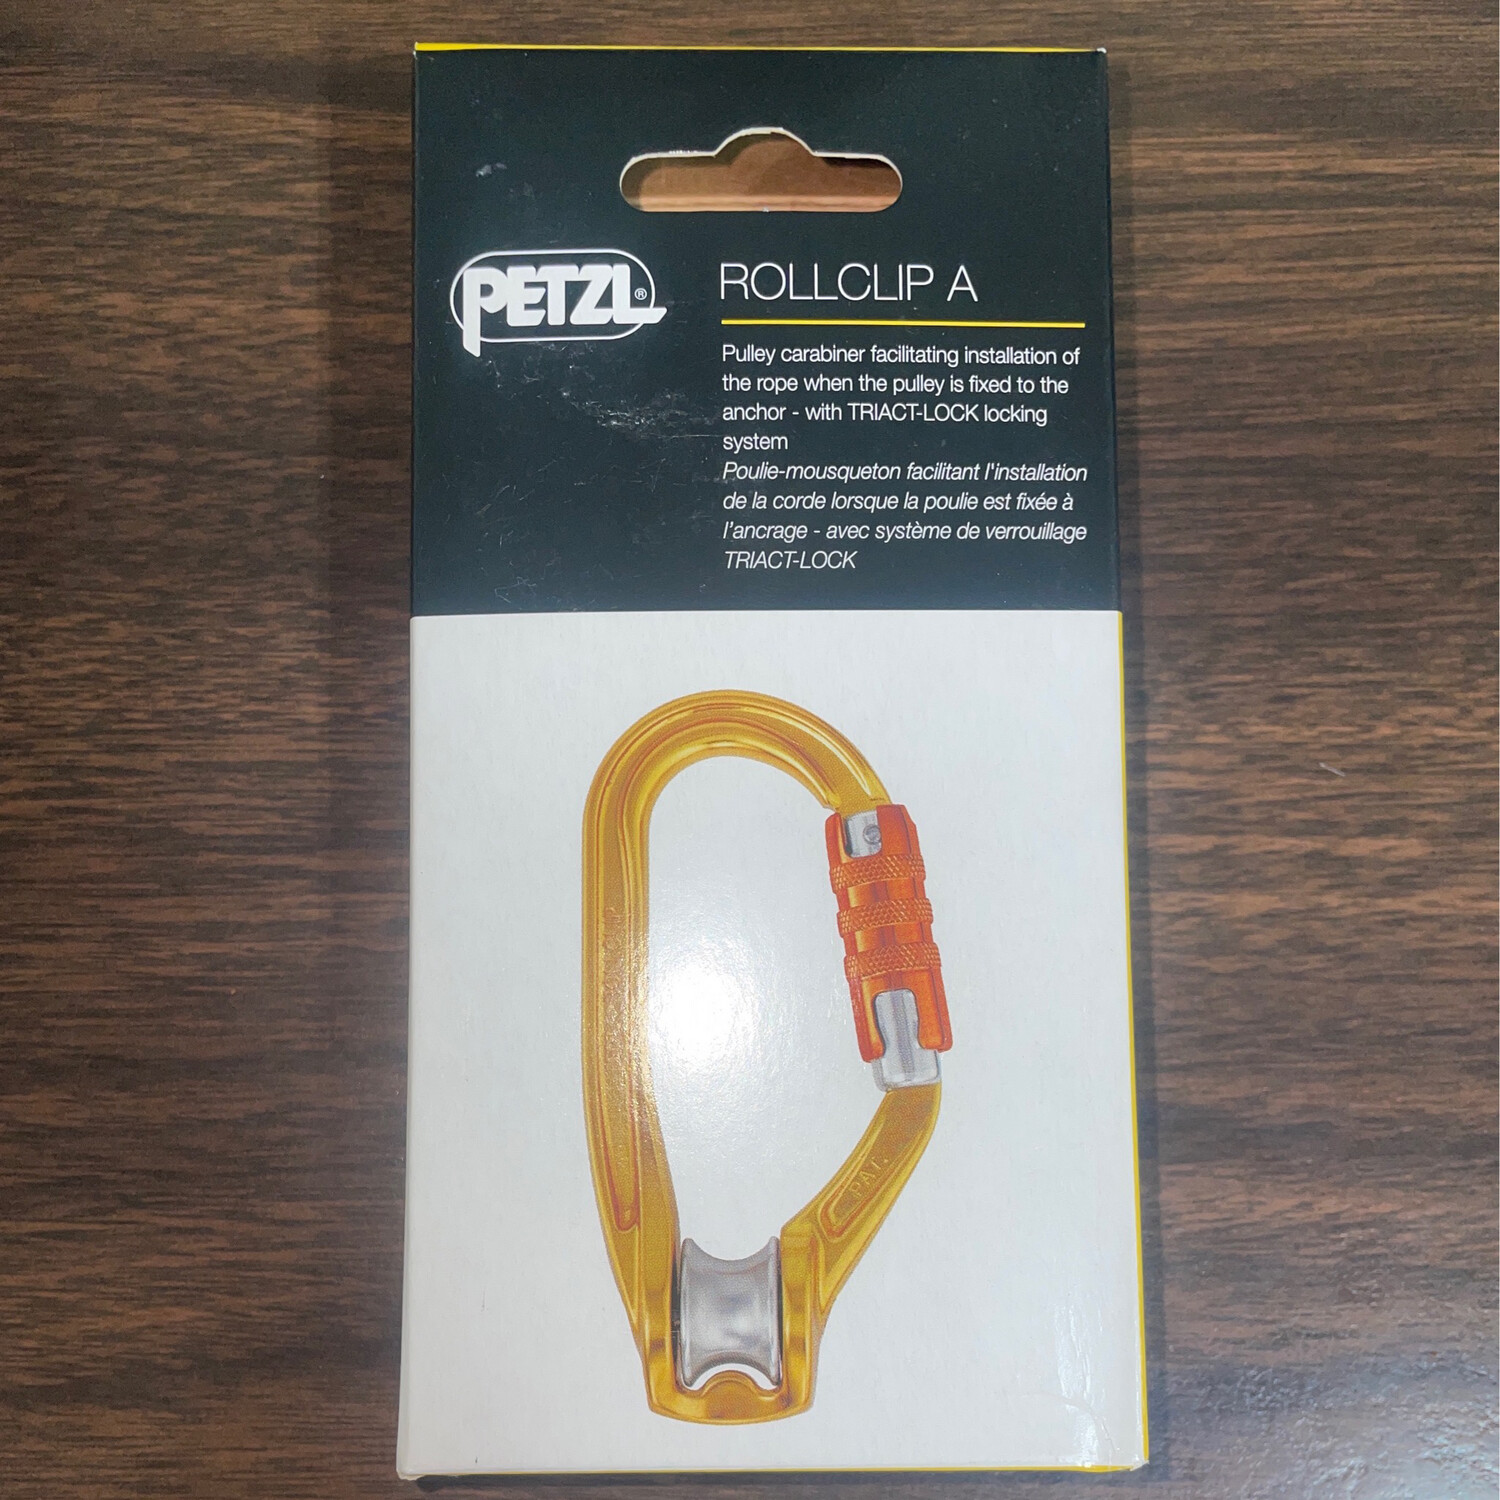 Petzl Rollclip Triact-lock Pulley